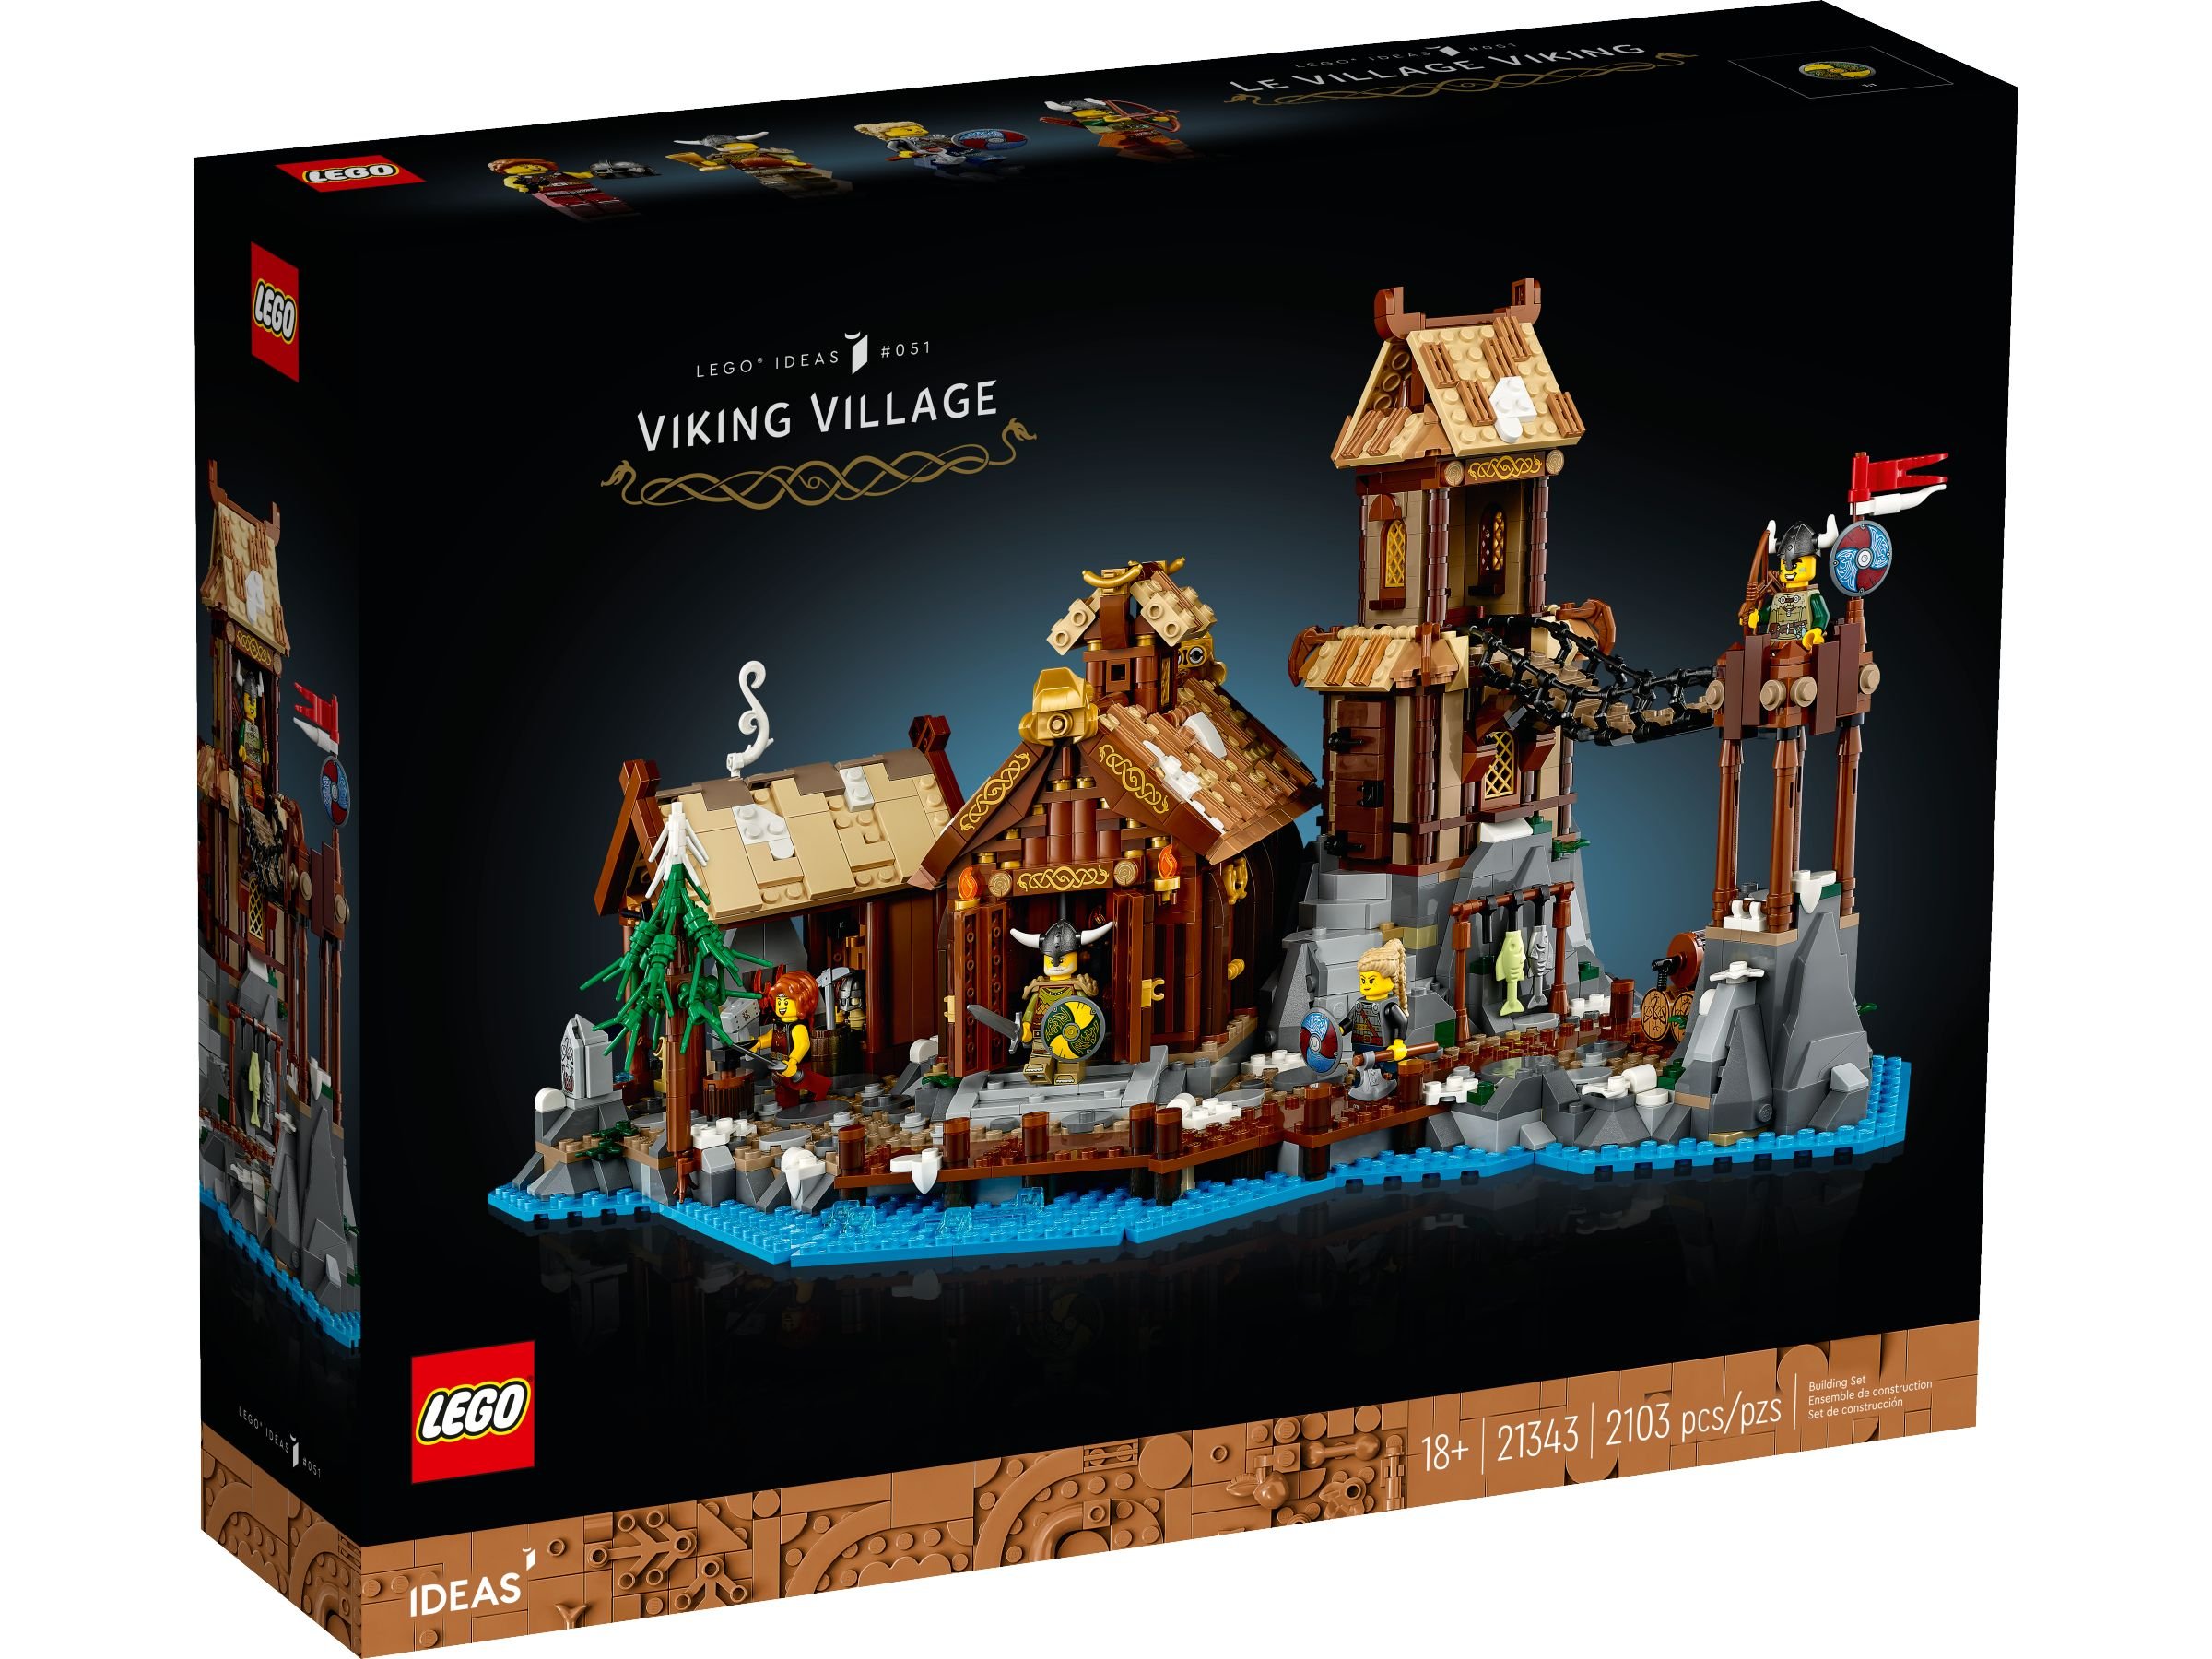 LEGO Ideas 21343 Wikingerdorf LEGO_21343_Box1_v39.jpg